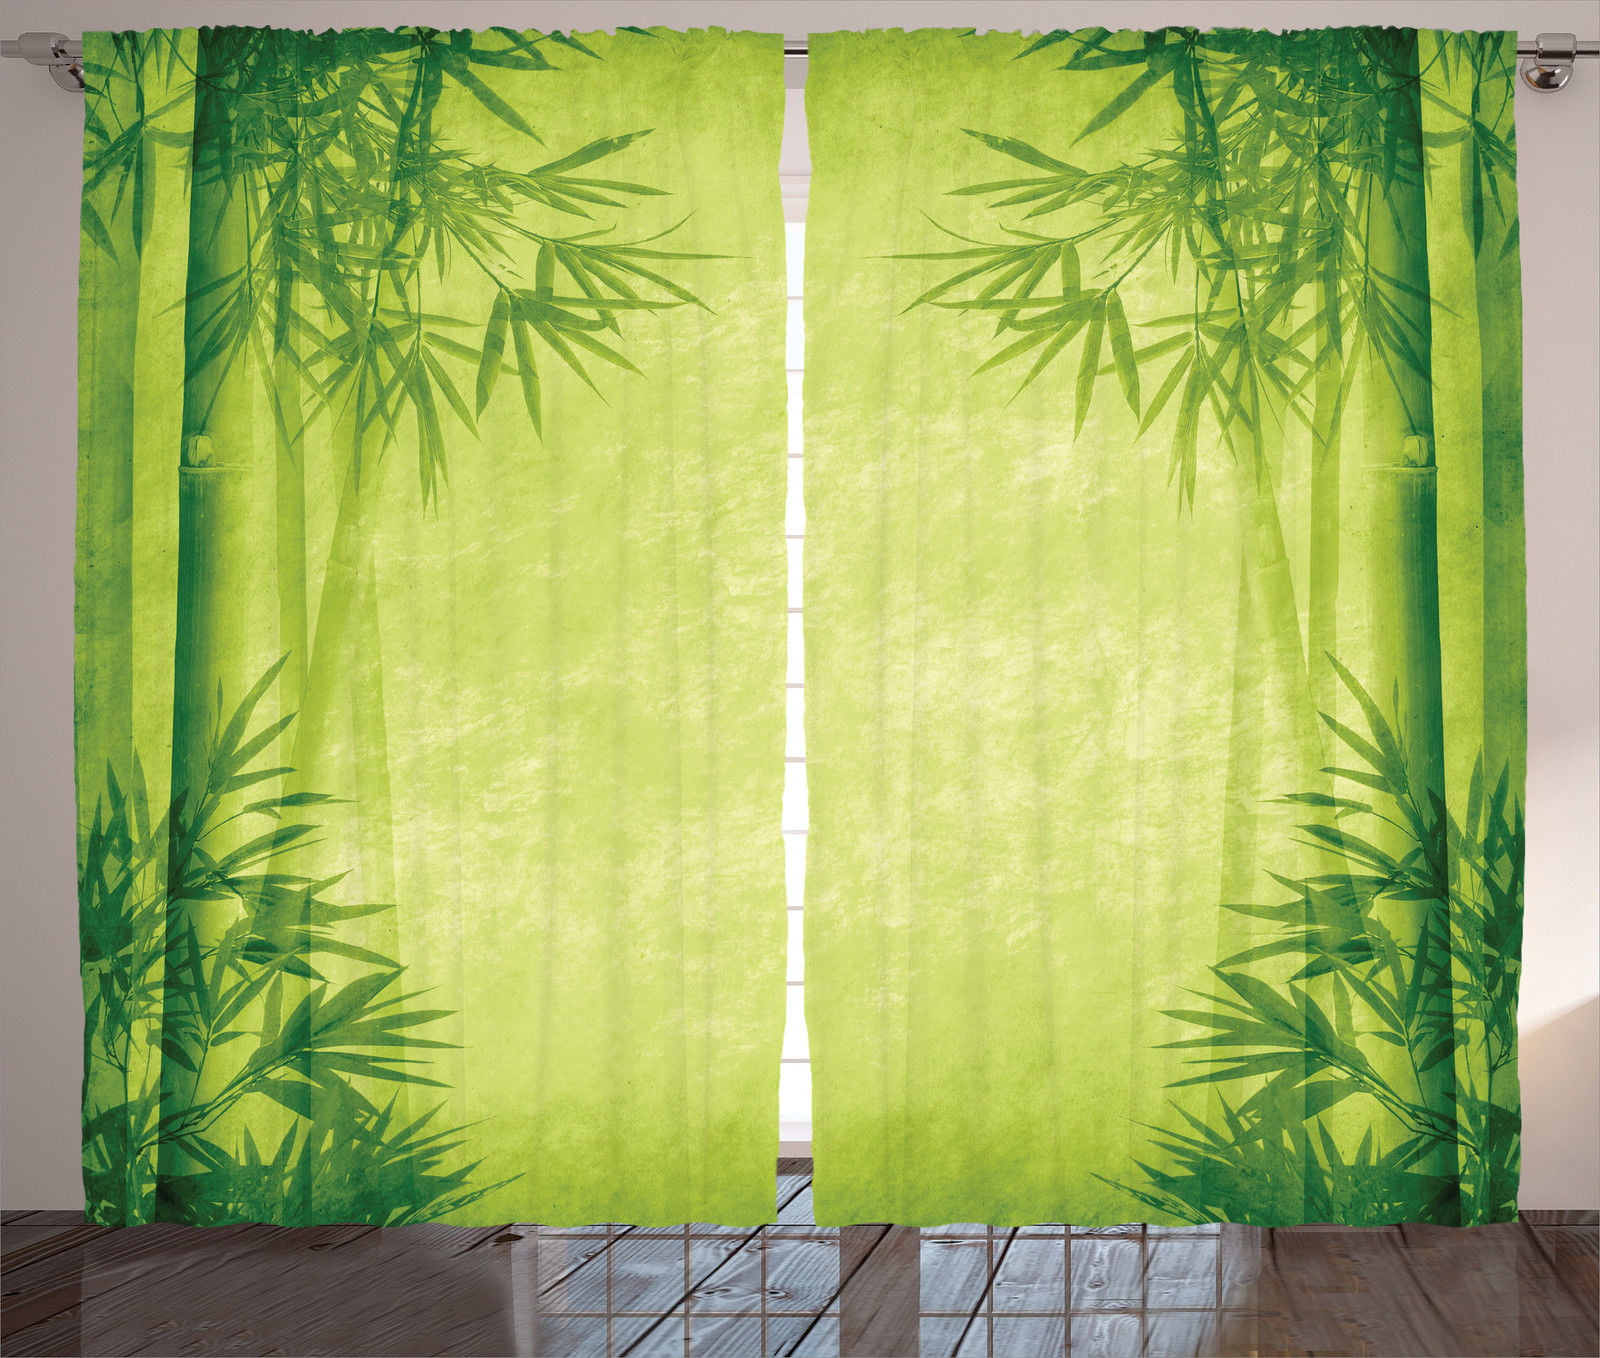 Bamboo Forest Panda 3D Blockout Photo Printing Curtain Drape Fabric Window 18 